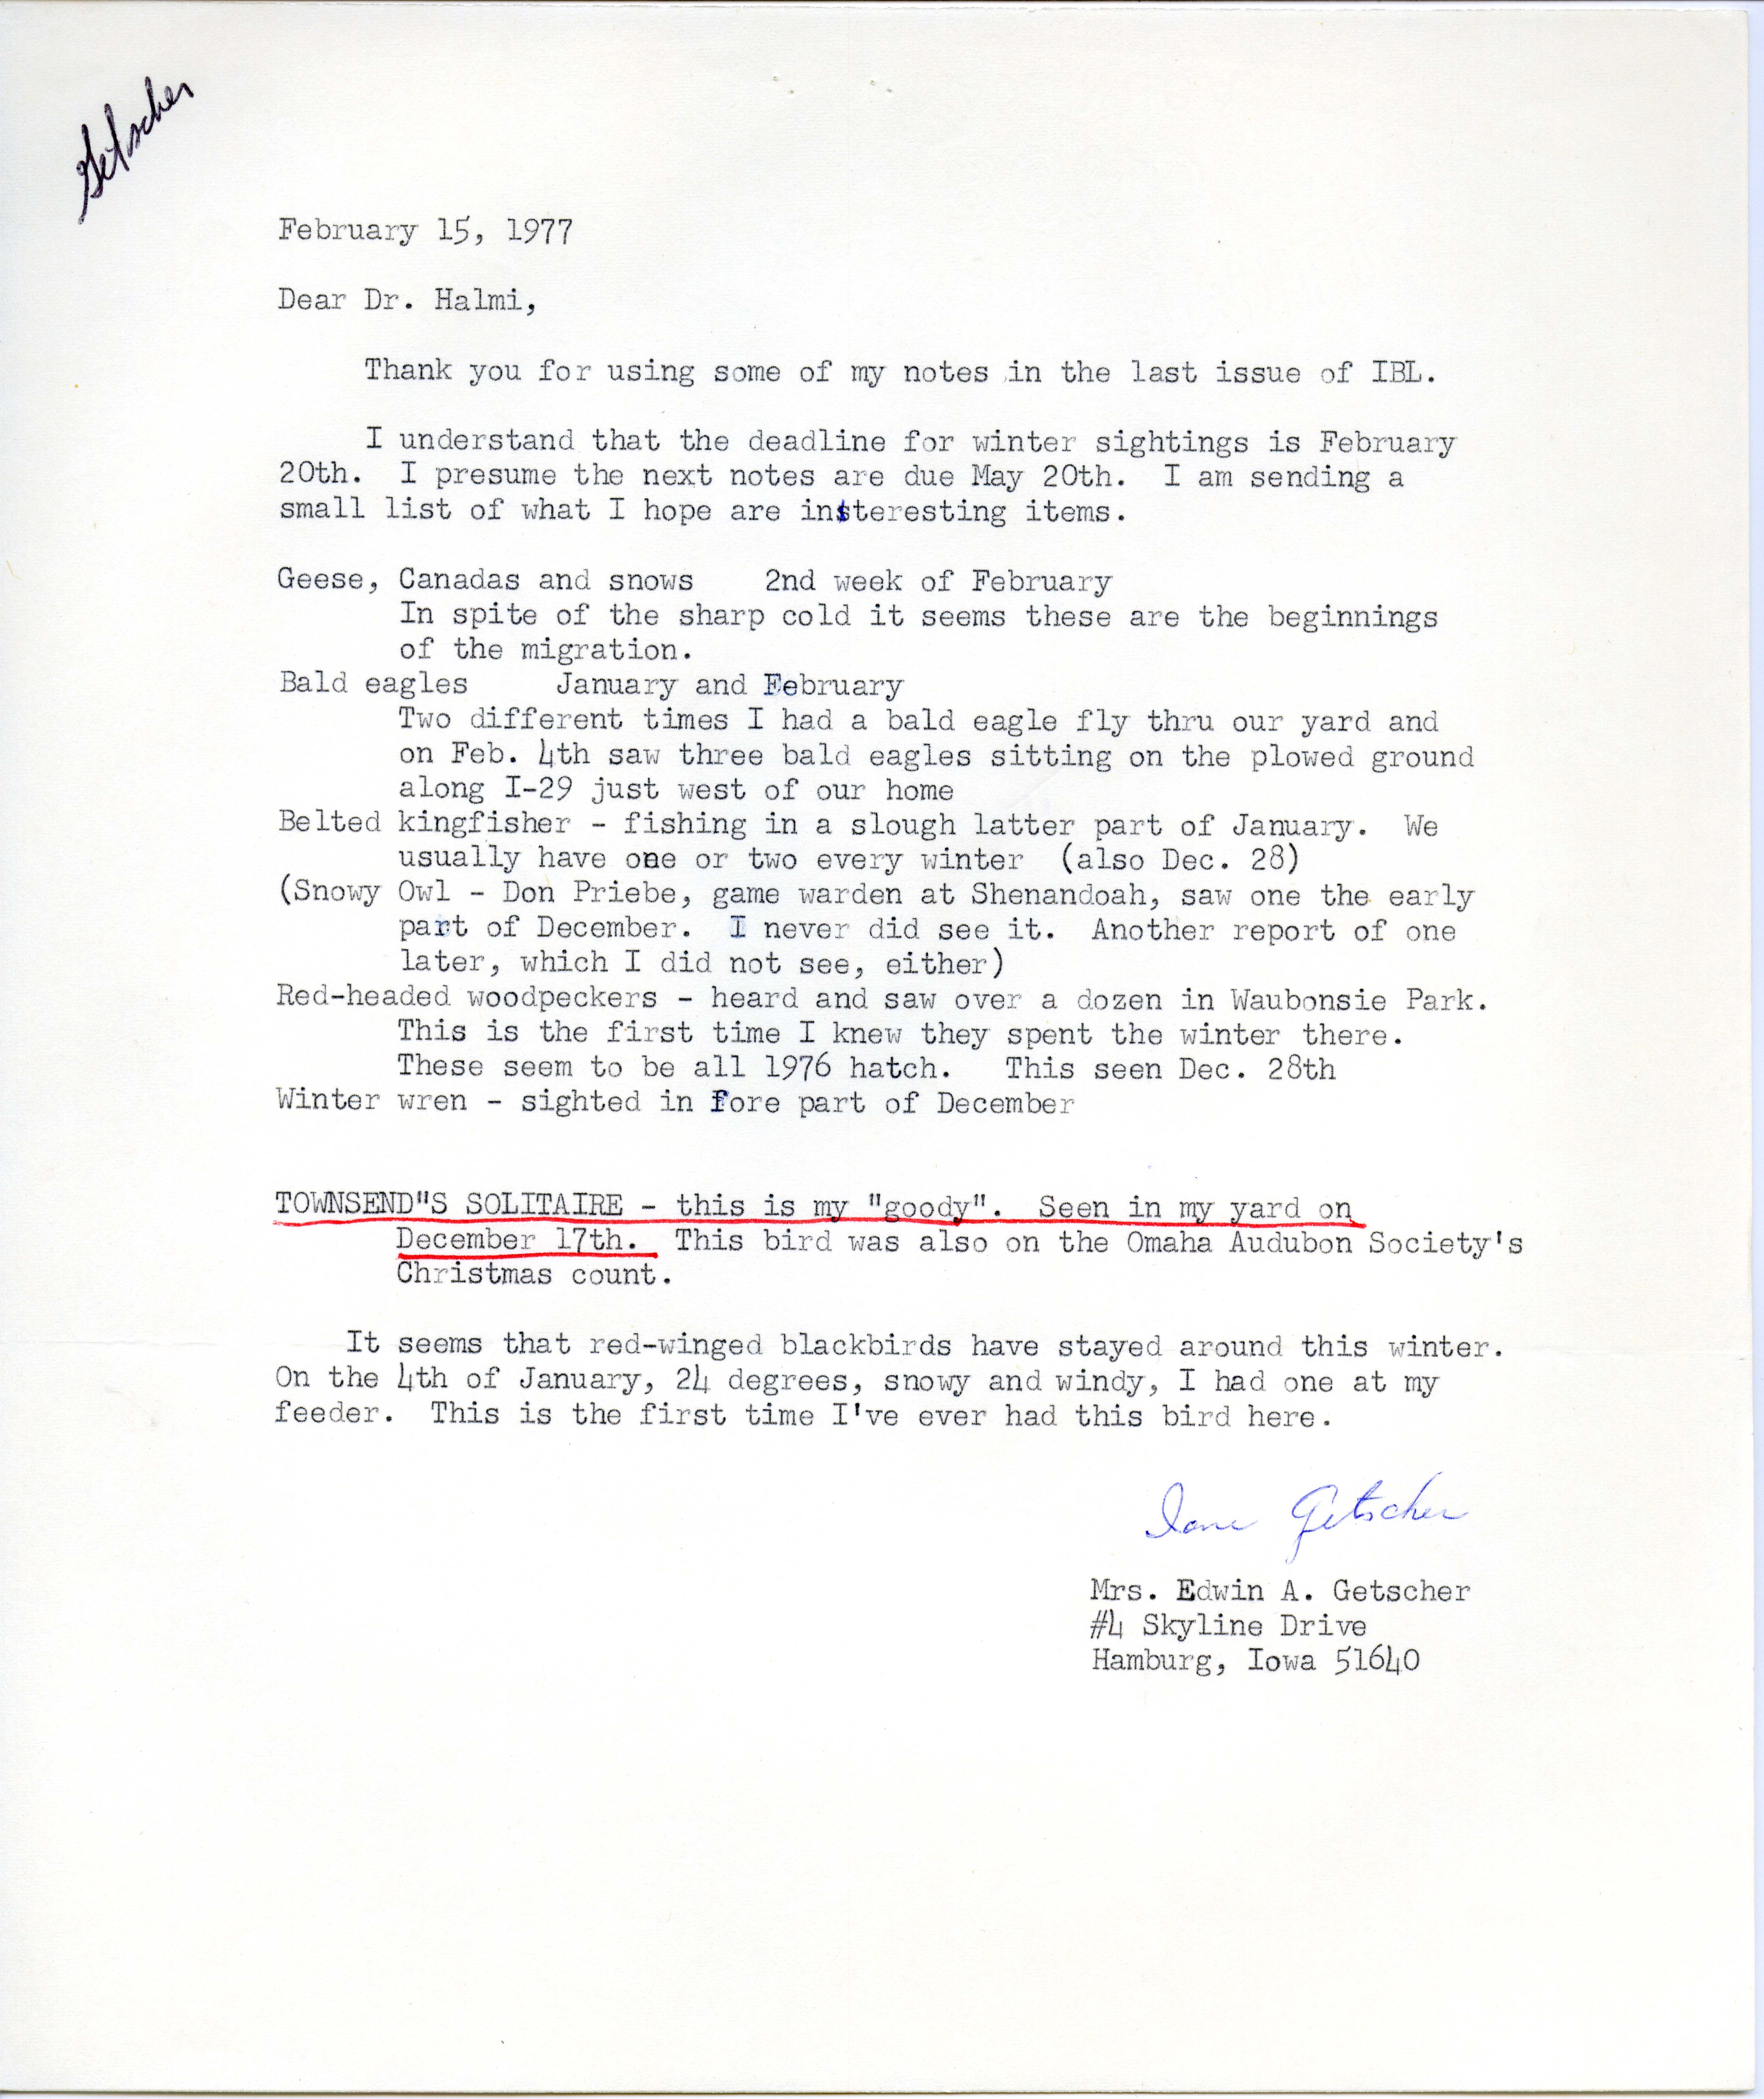 Ione Getscher letter to Nicholas S. Halmi regarding bird sightings, February 15, 1977